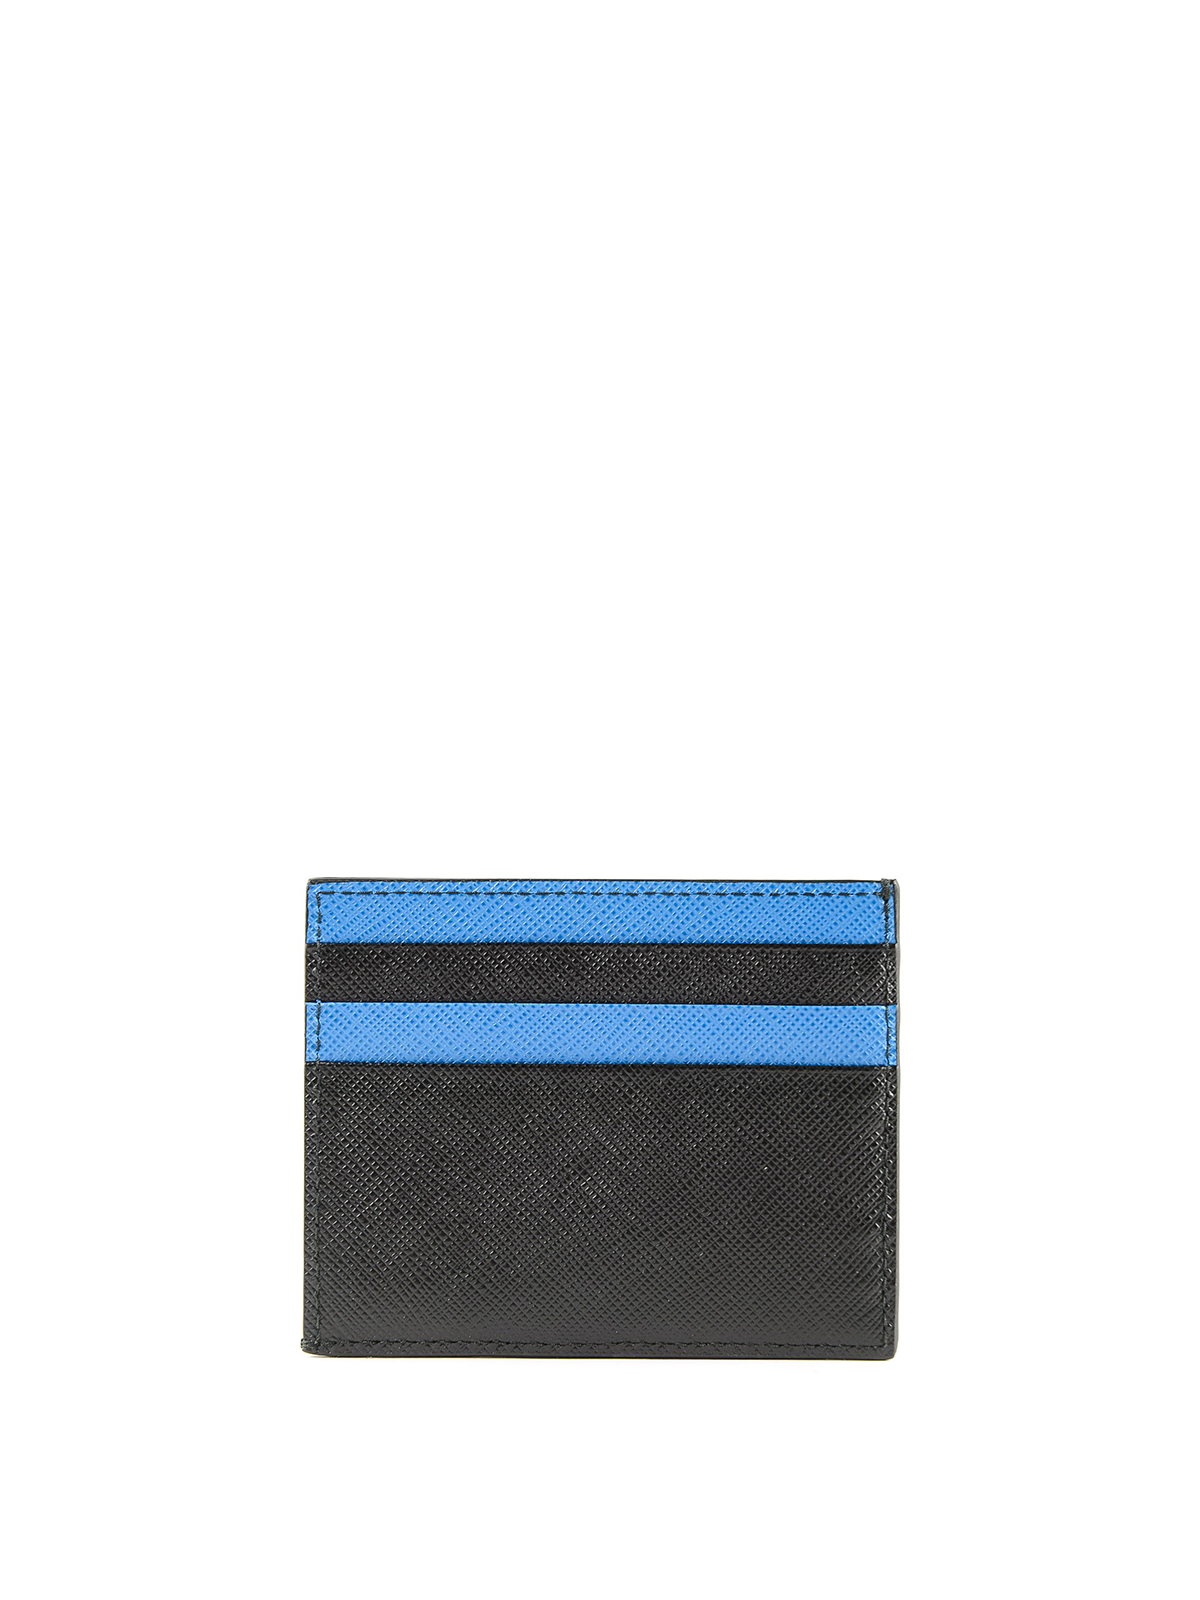 Prada Blue Saffiano Leather Money Clip Wallet, Men's Fashion